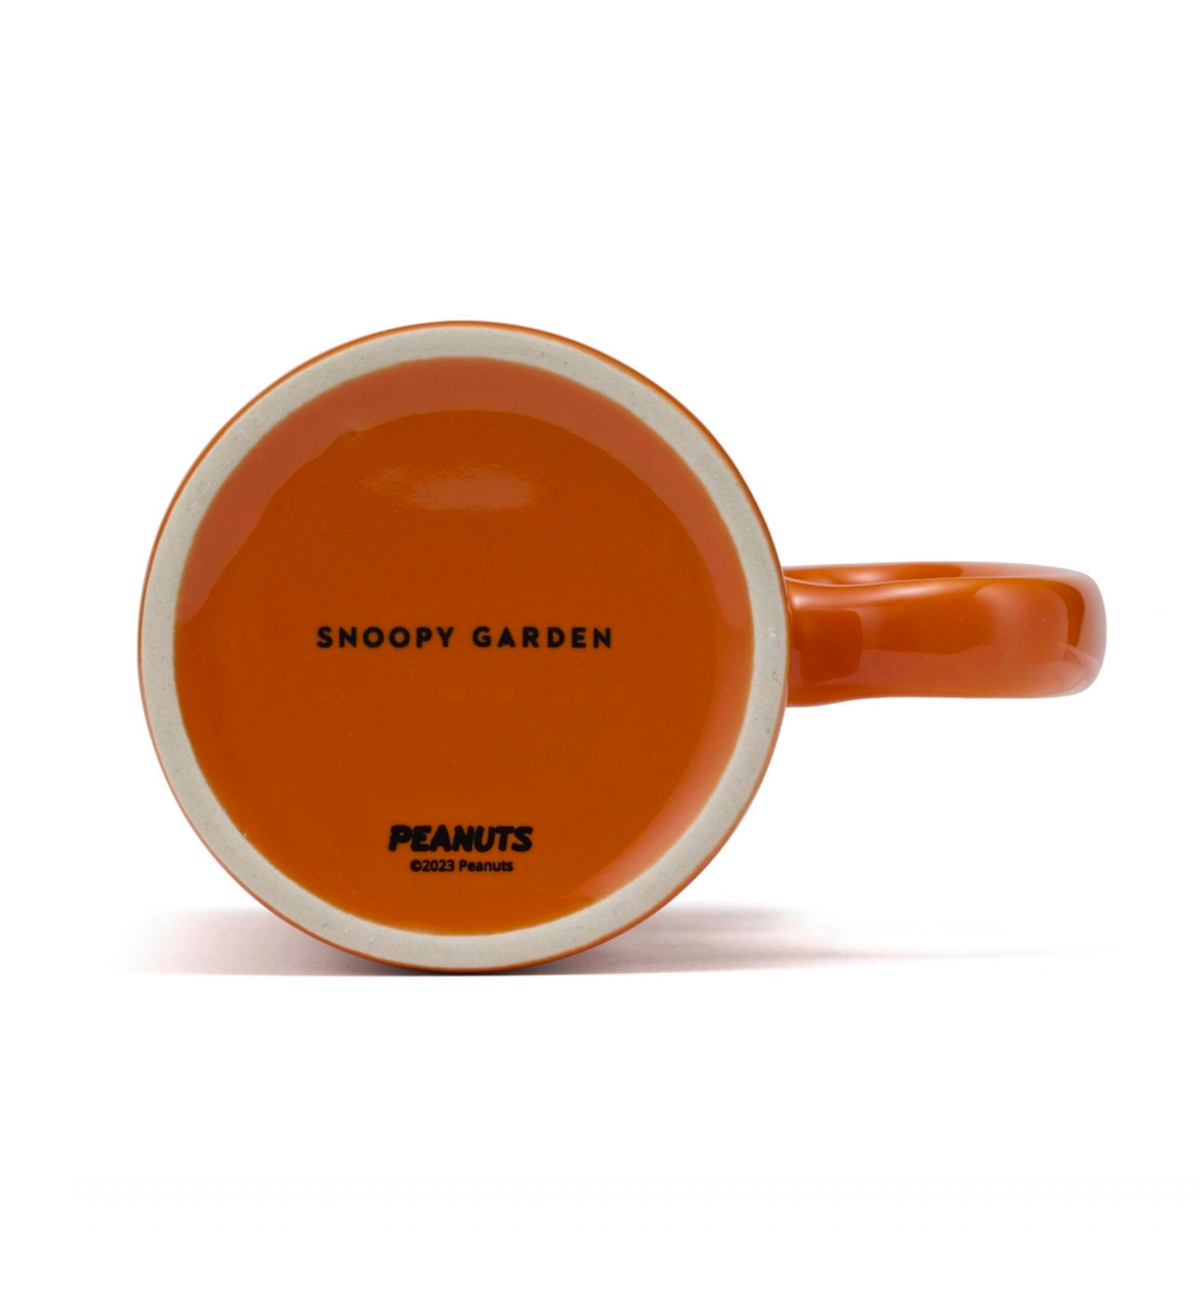 Peanuts Charlie Brown Colored Long Mug Cup